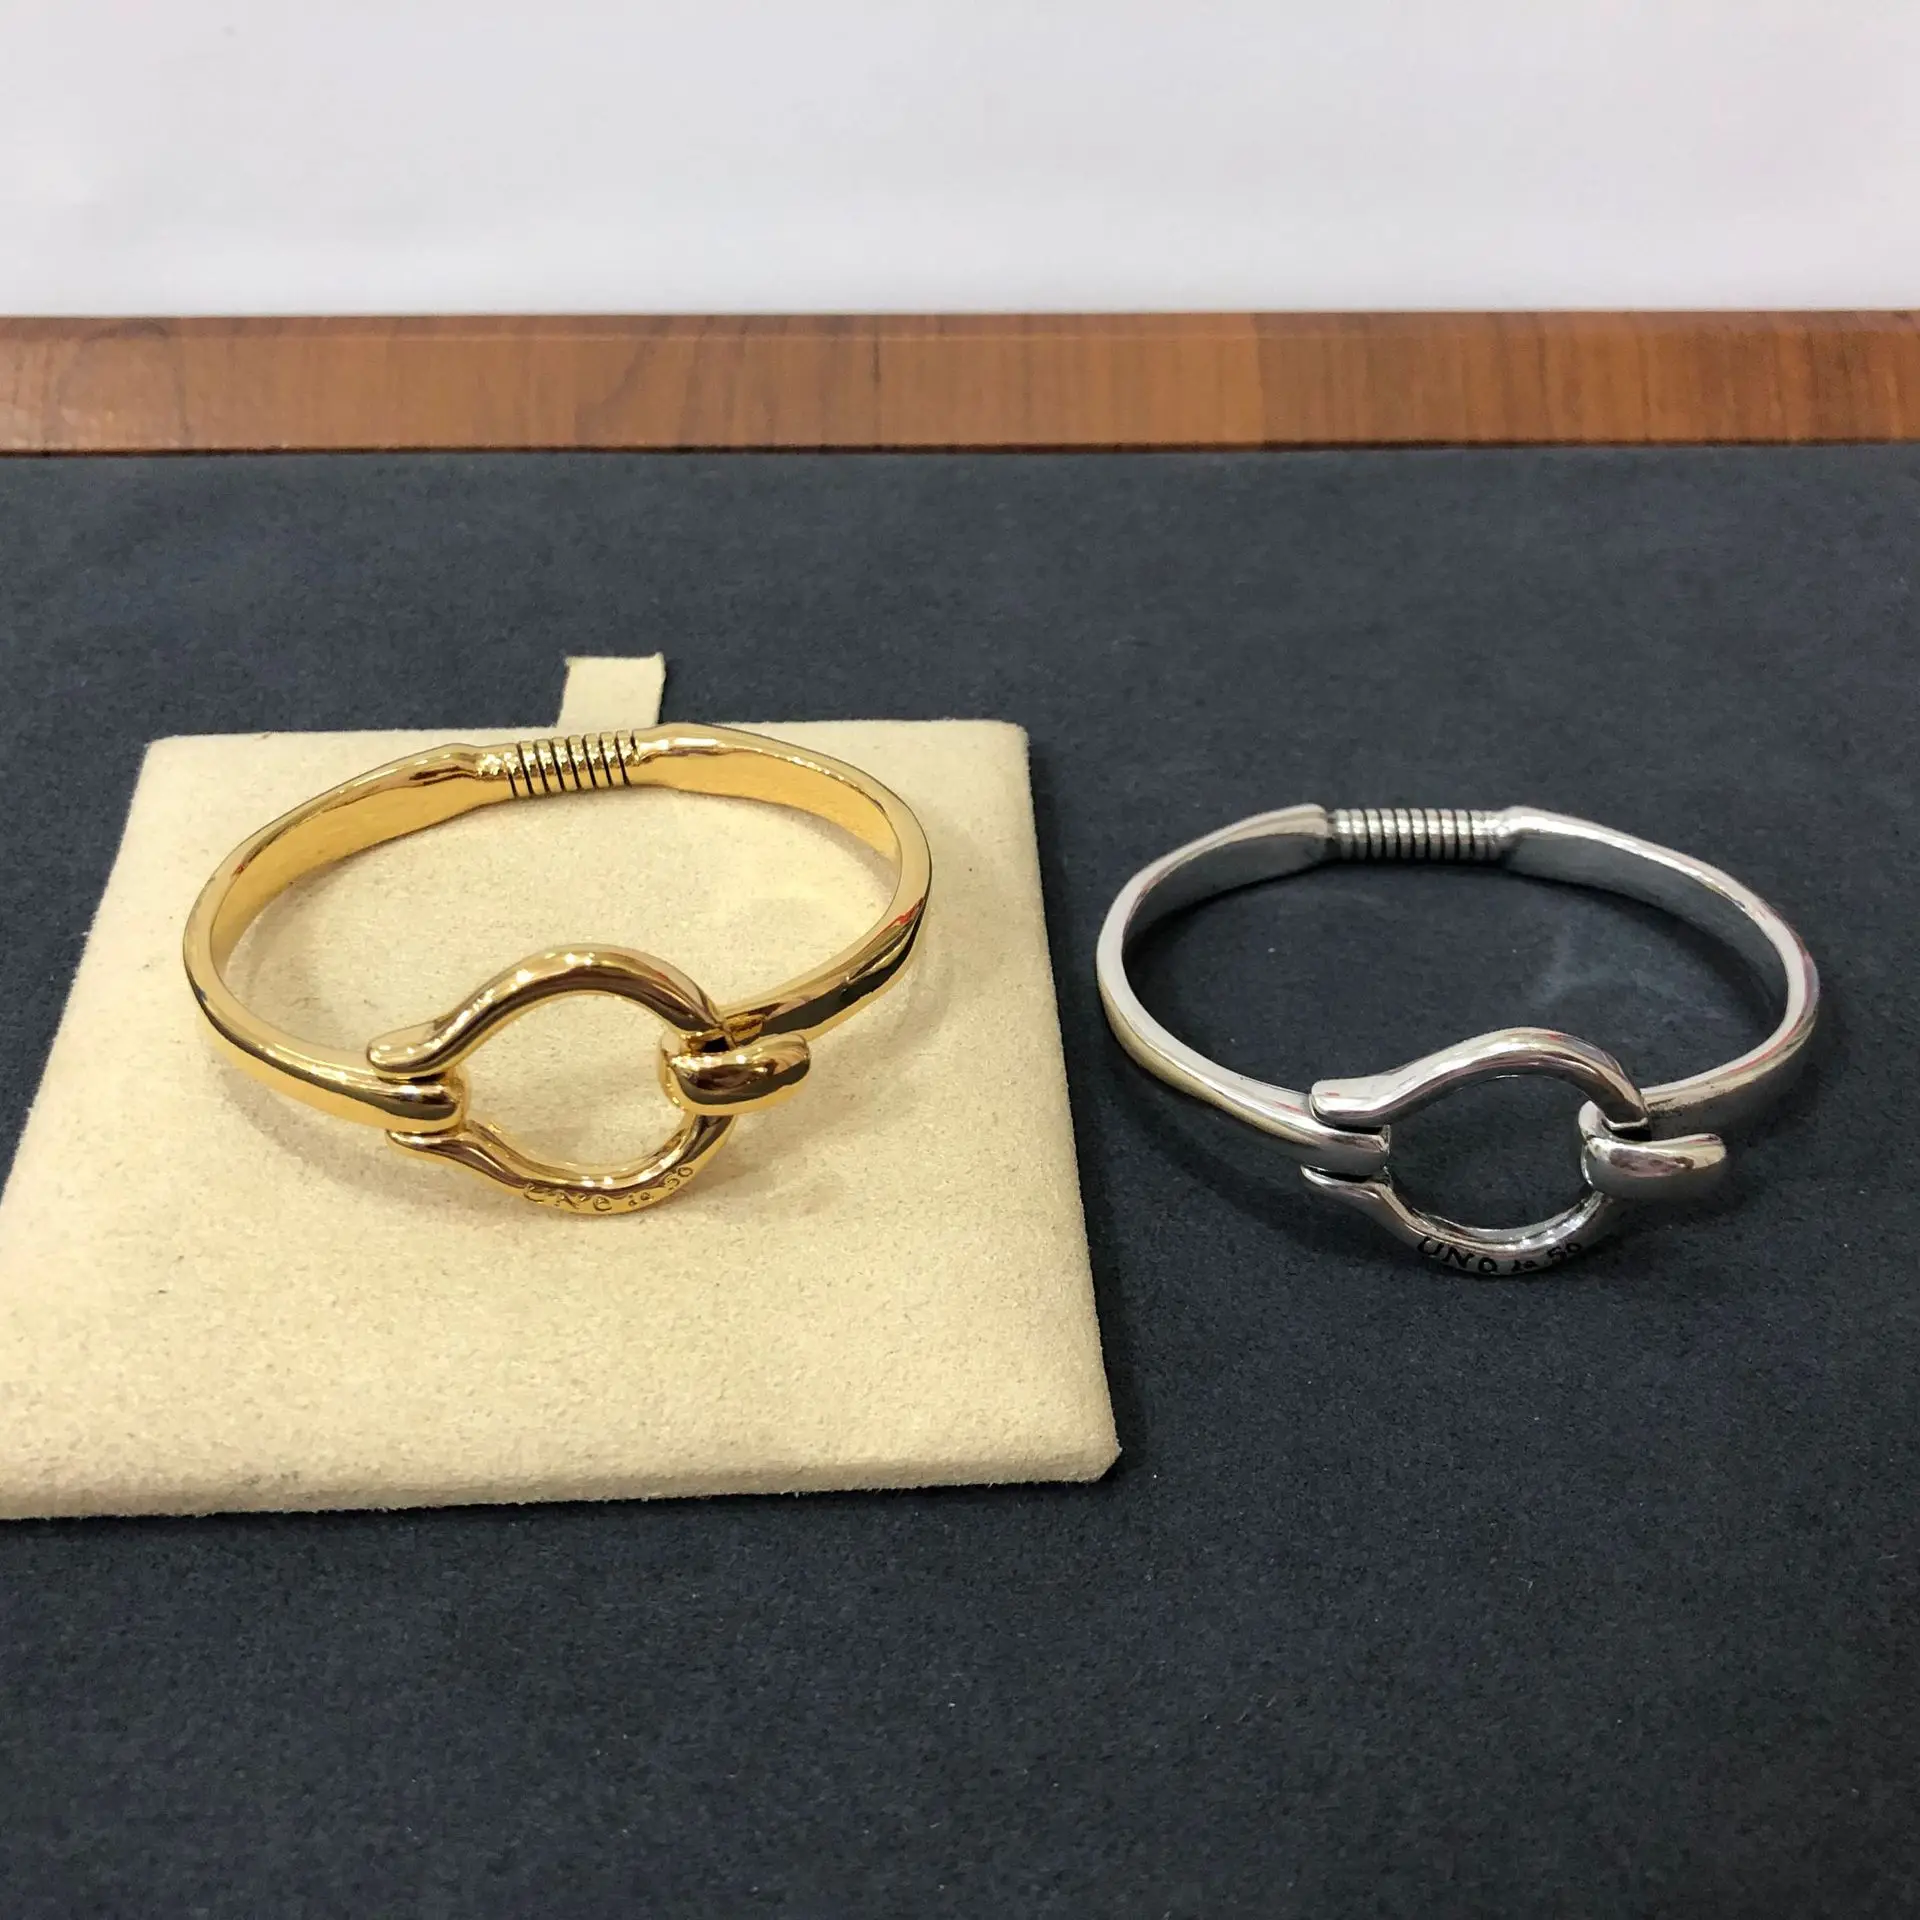 

Best Sales Unique Design Original Fashion Electroplating 925 Silver 14 K Gold Handcuffs Bracelet Simple Jewelry Luxury Gift